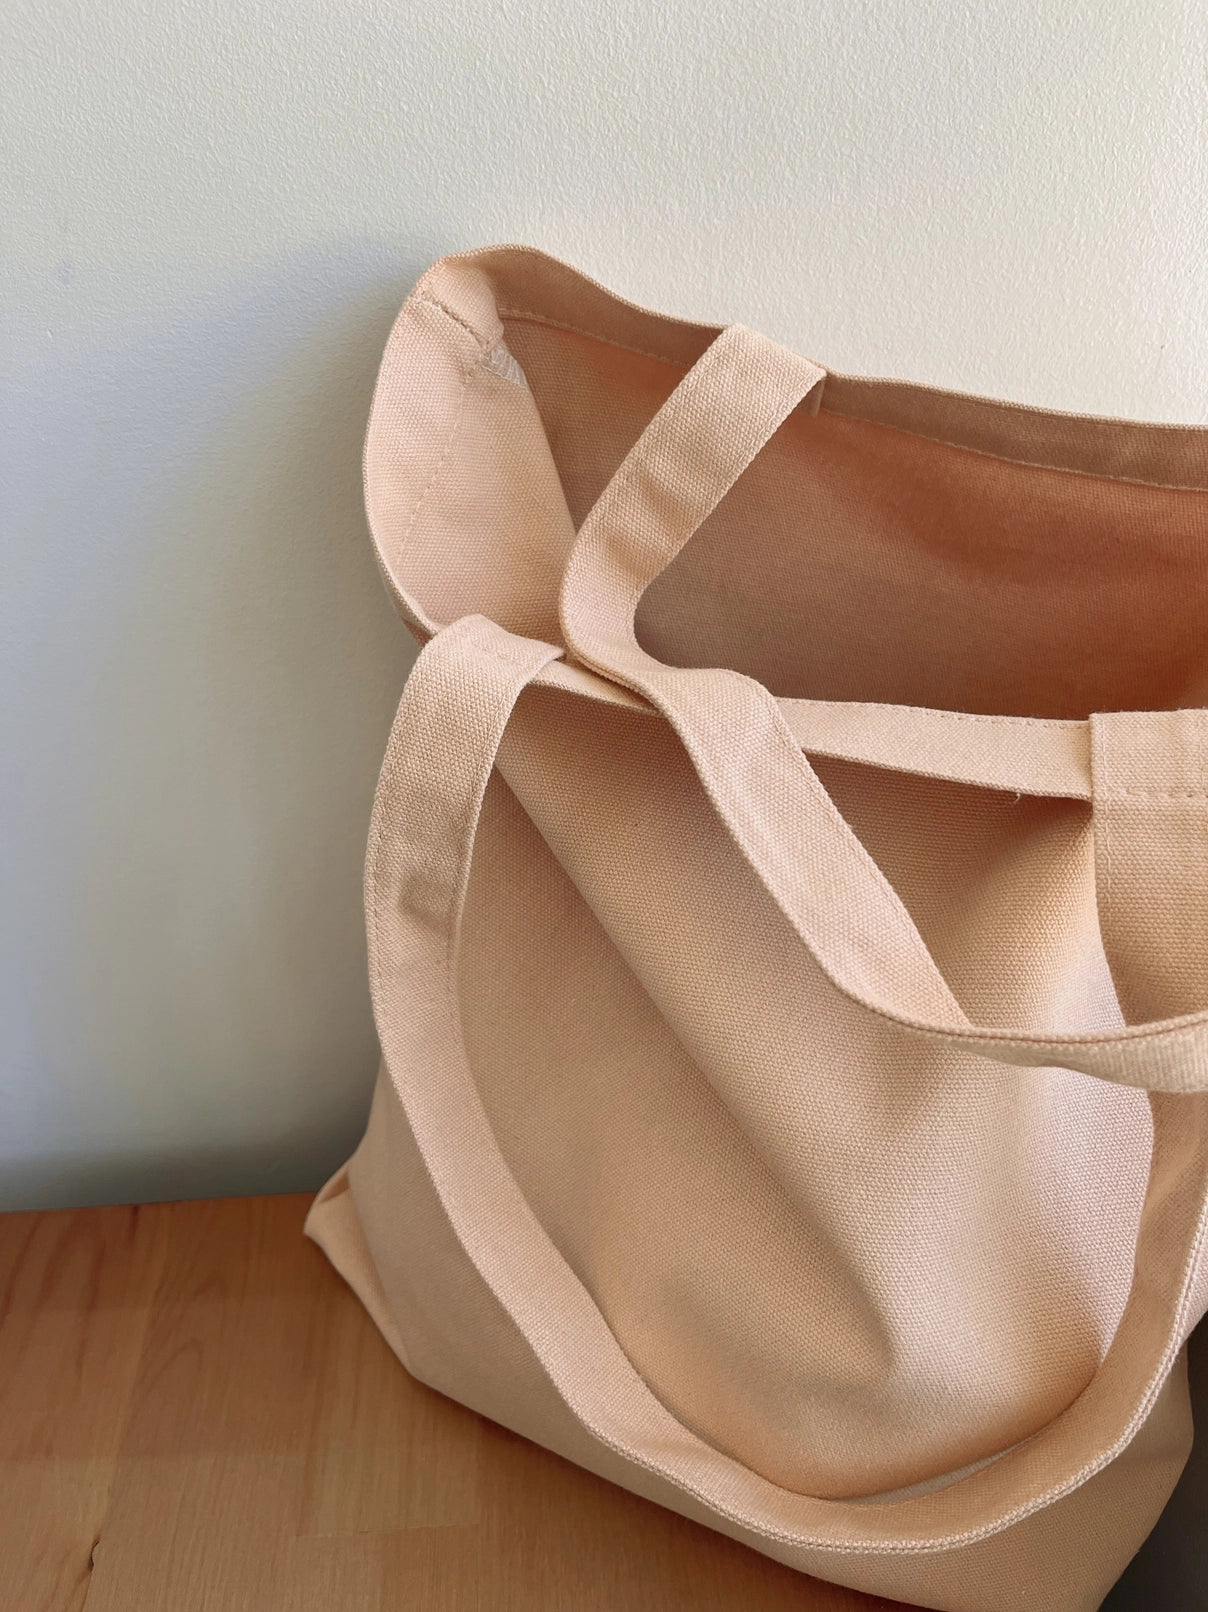 Simple Canvas Tote Bag